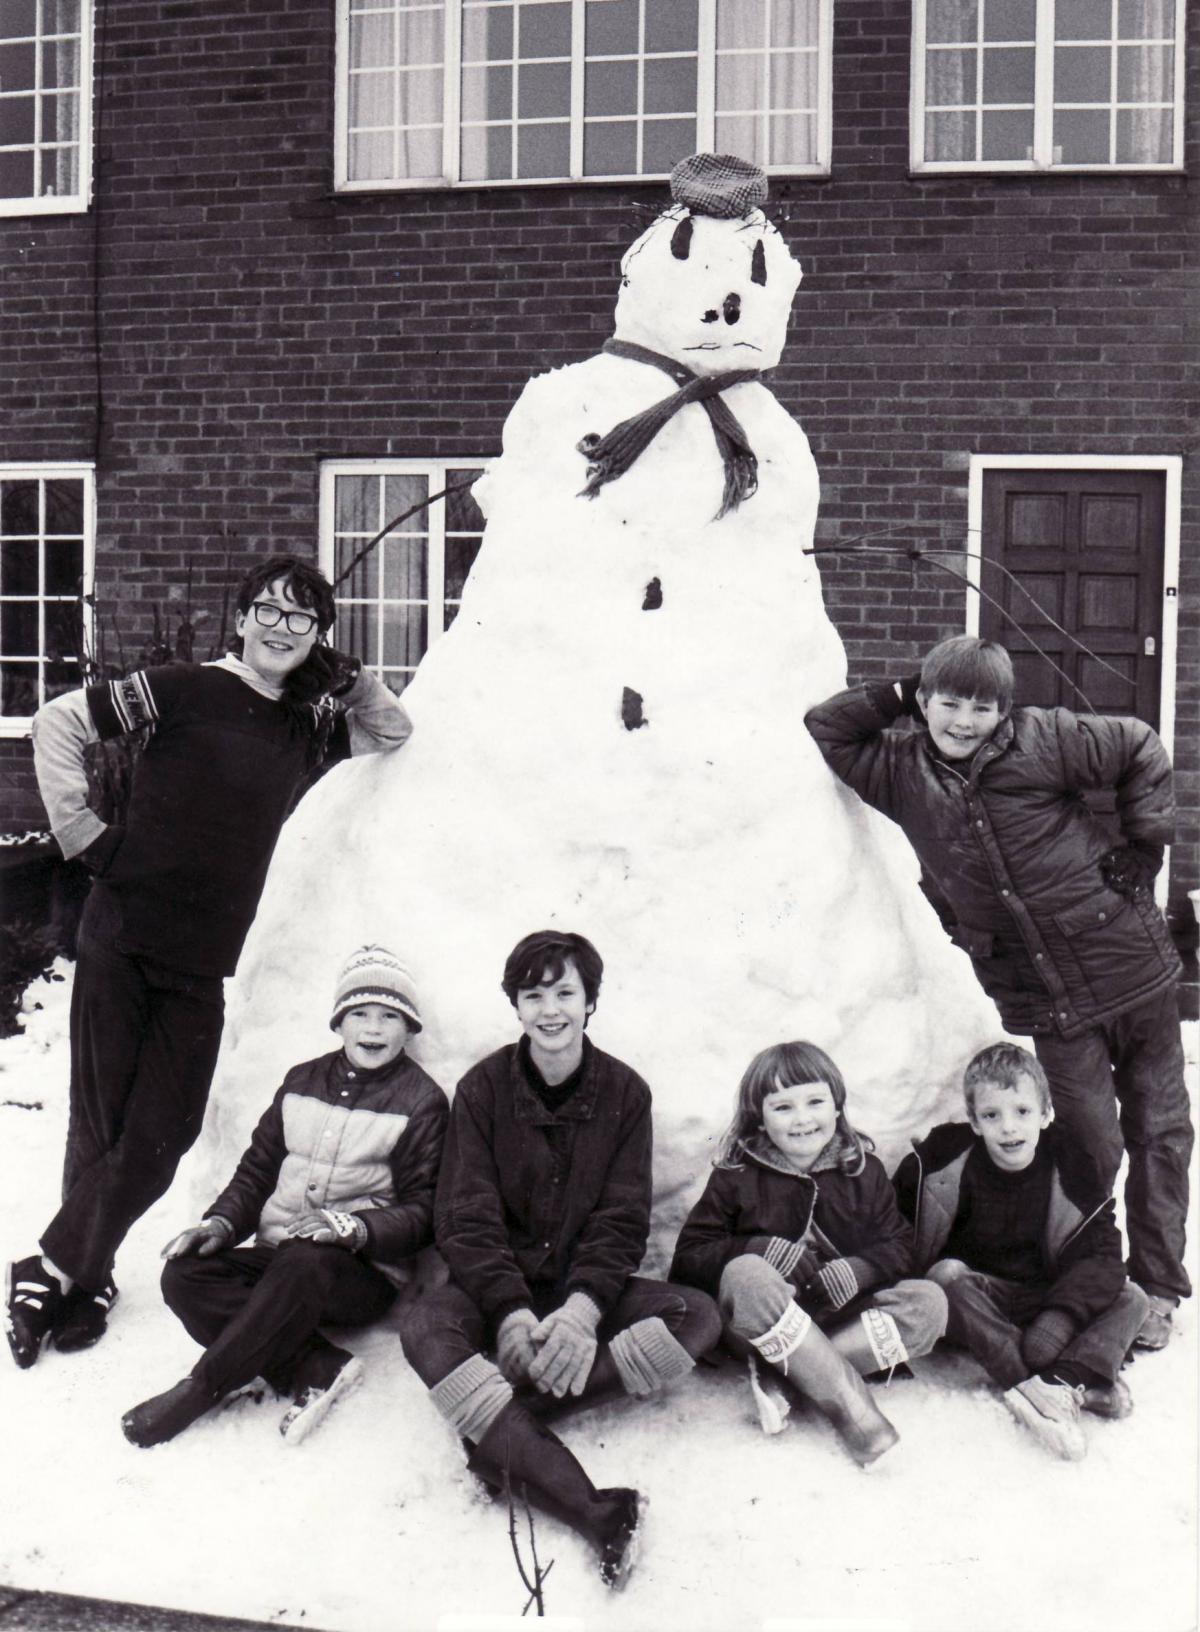 January 1986 - Giant snowman in Larkhill, off Longcauseway, Farnworth